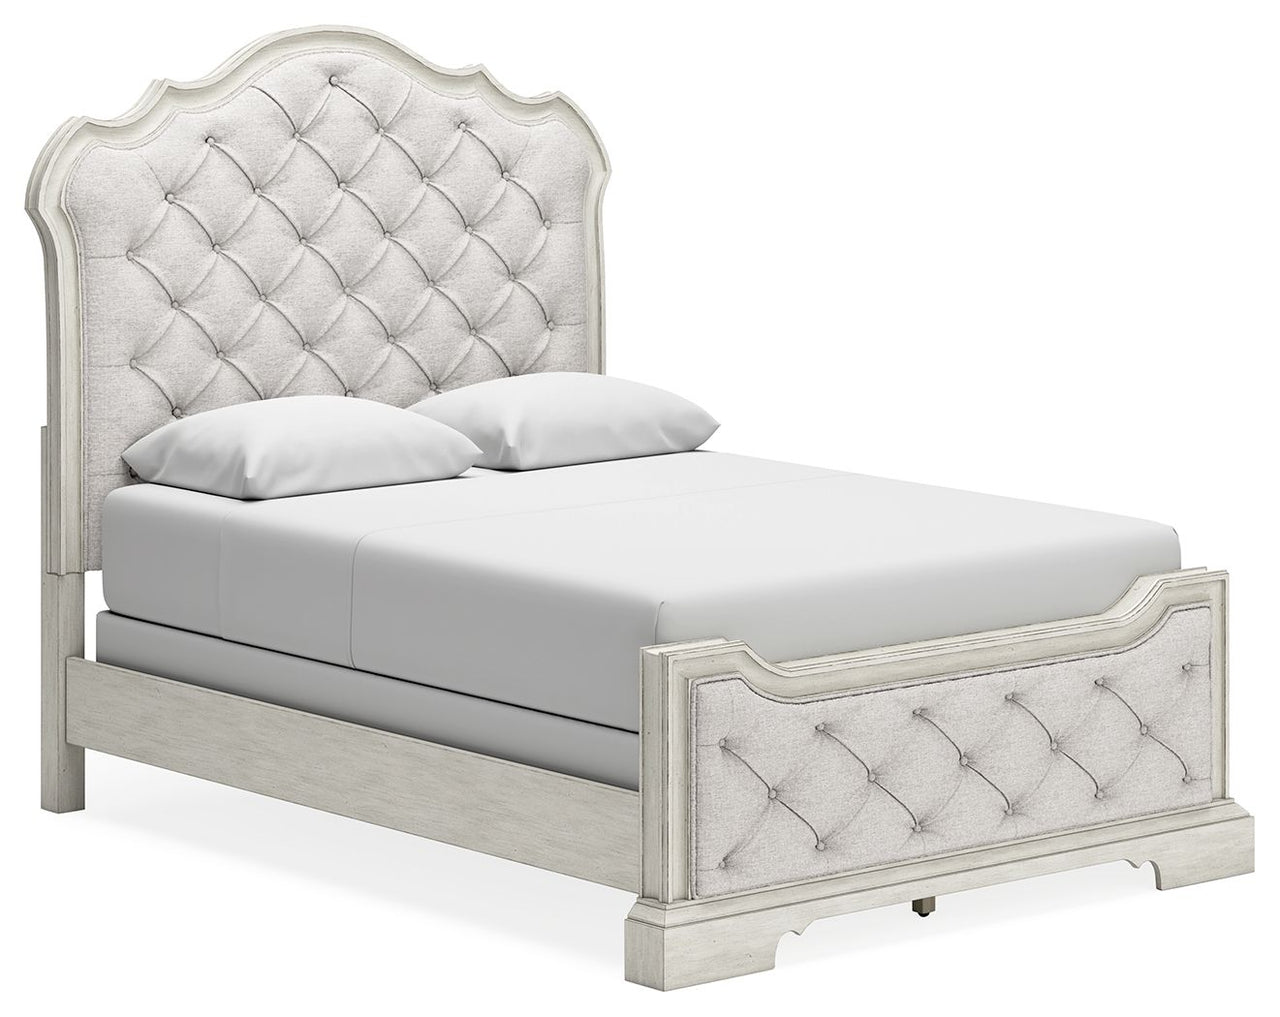 Arlendyne - Upholstered Bed - Tony's Home Furnishings